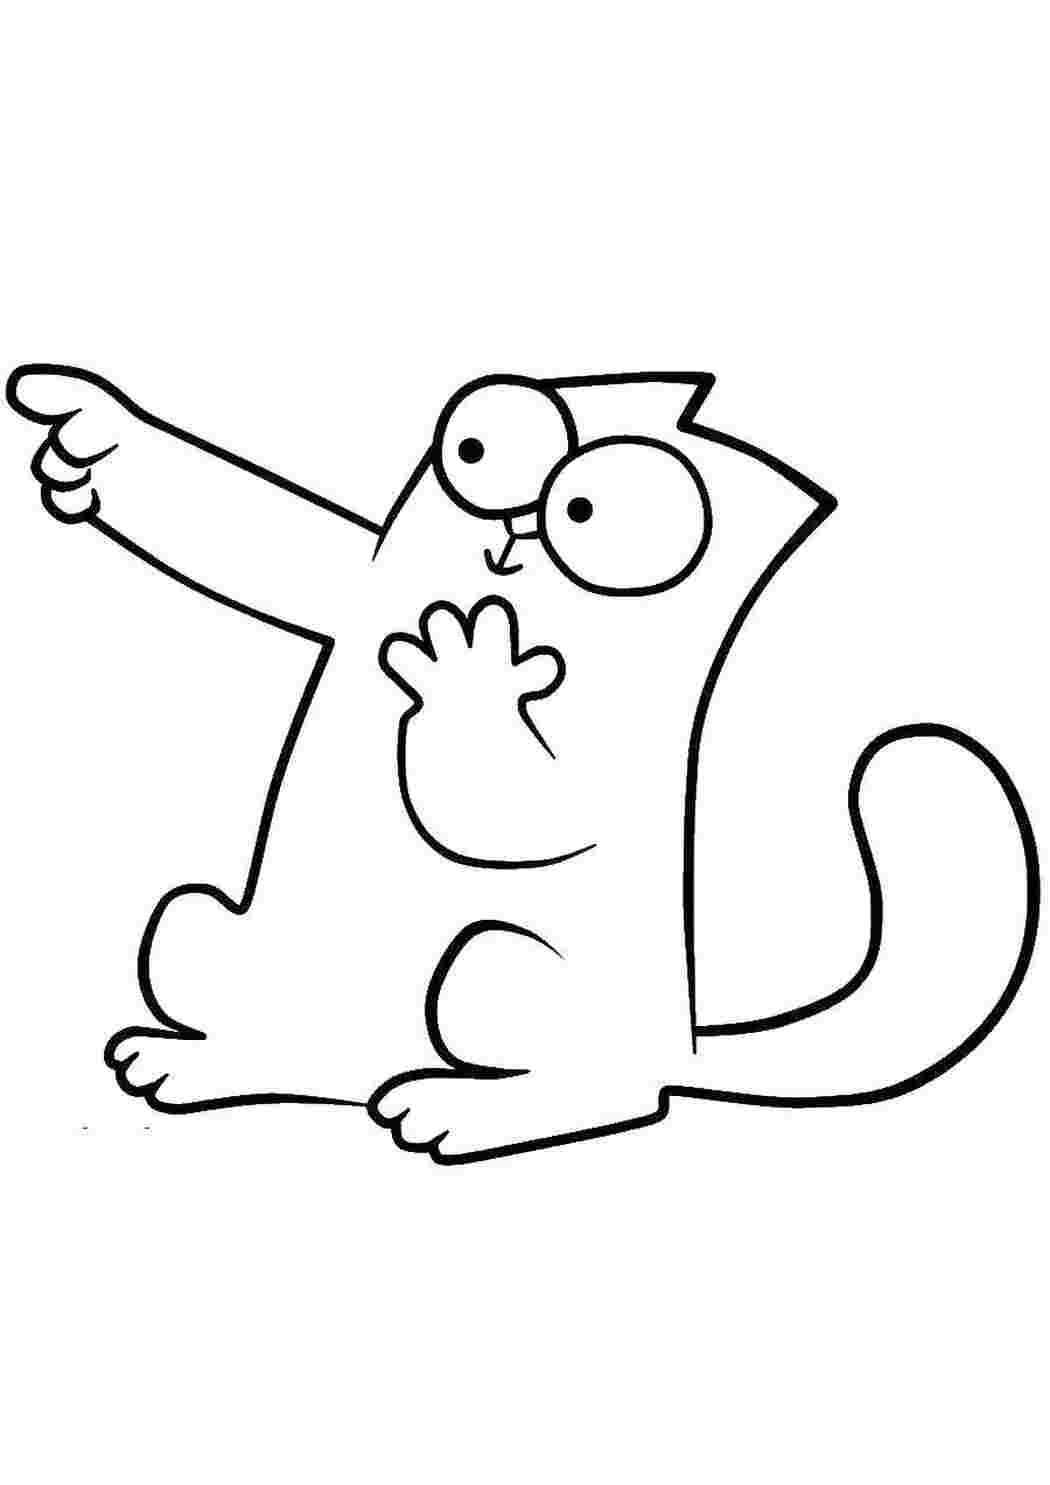 Раскраски Кот саймона кот саймона мультфильм, Кот саймона